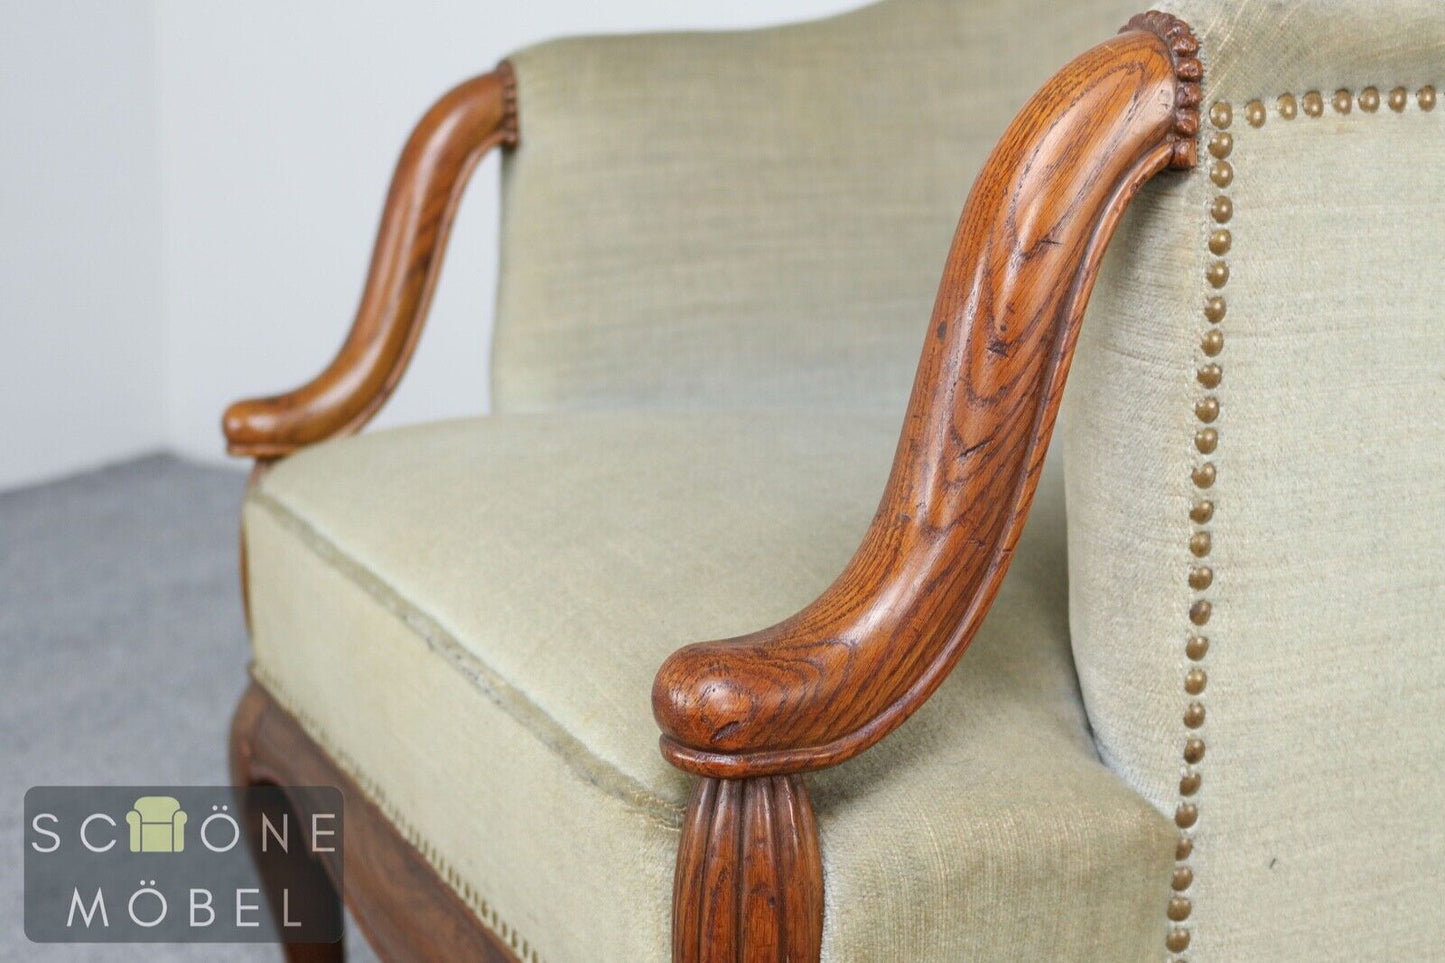 Wunderschöner Antik Sessel Barockstil Armlehnensessel Chair Empire Armchair